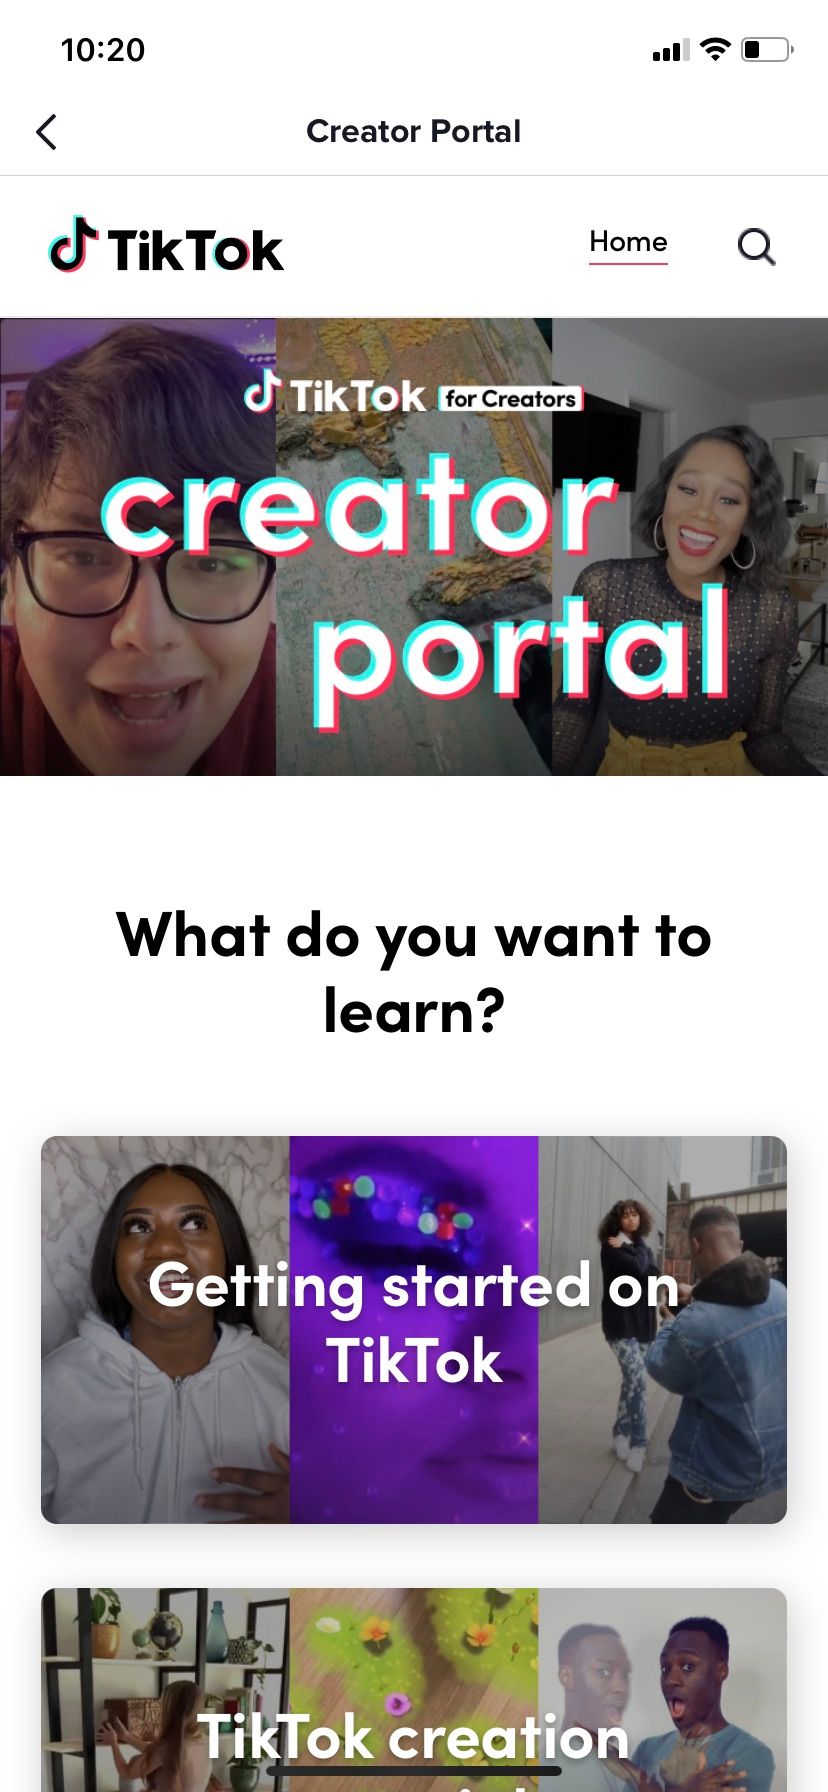 tiktok creator portal home page screenshot